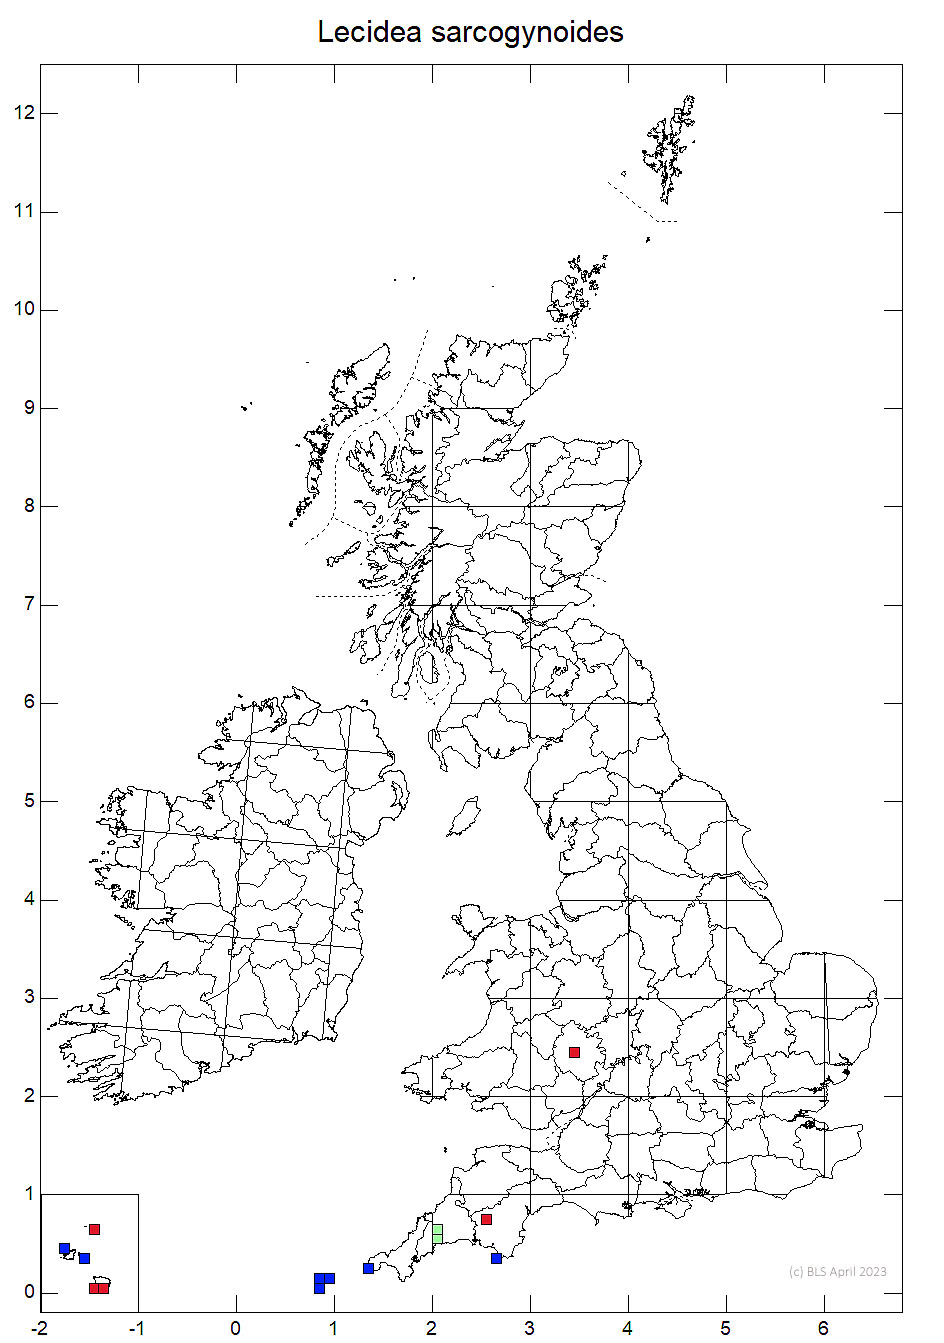 Lecidea sarcogynoides 10km sq distribution map